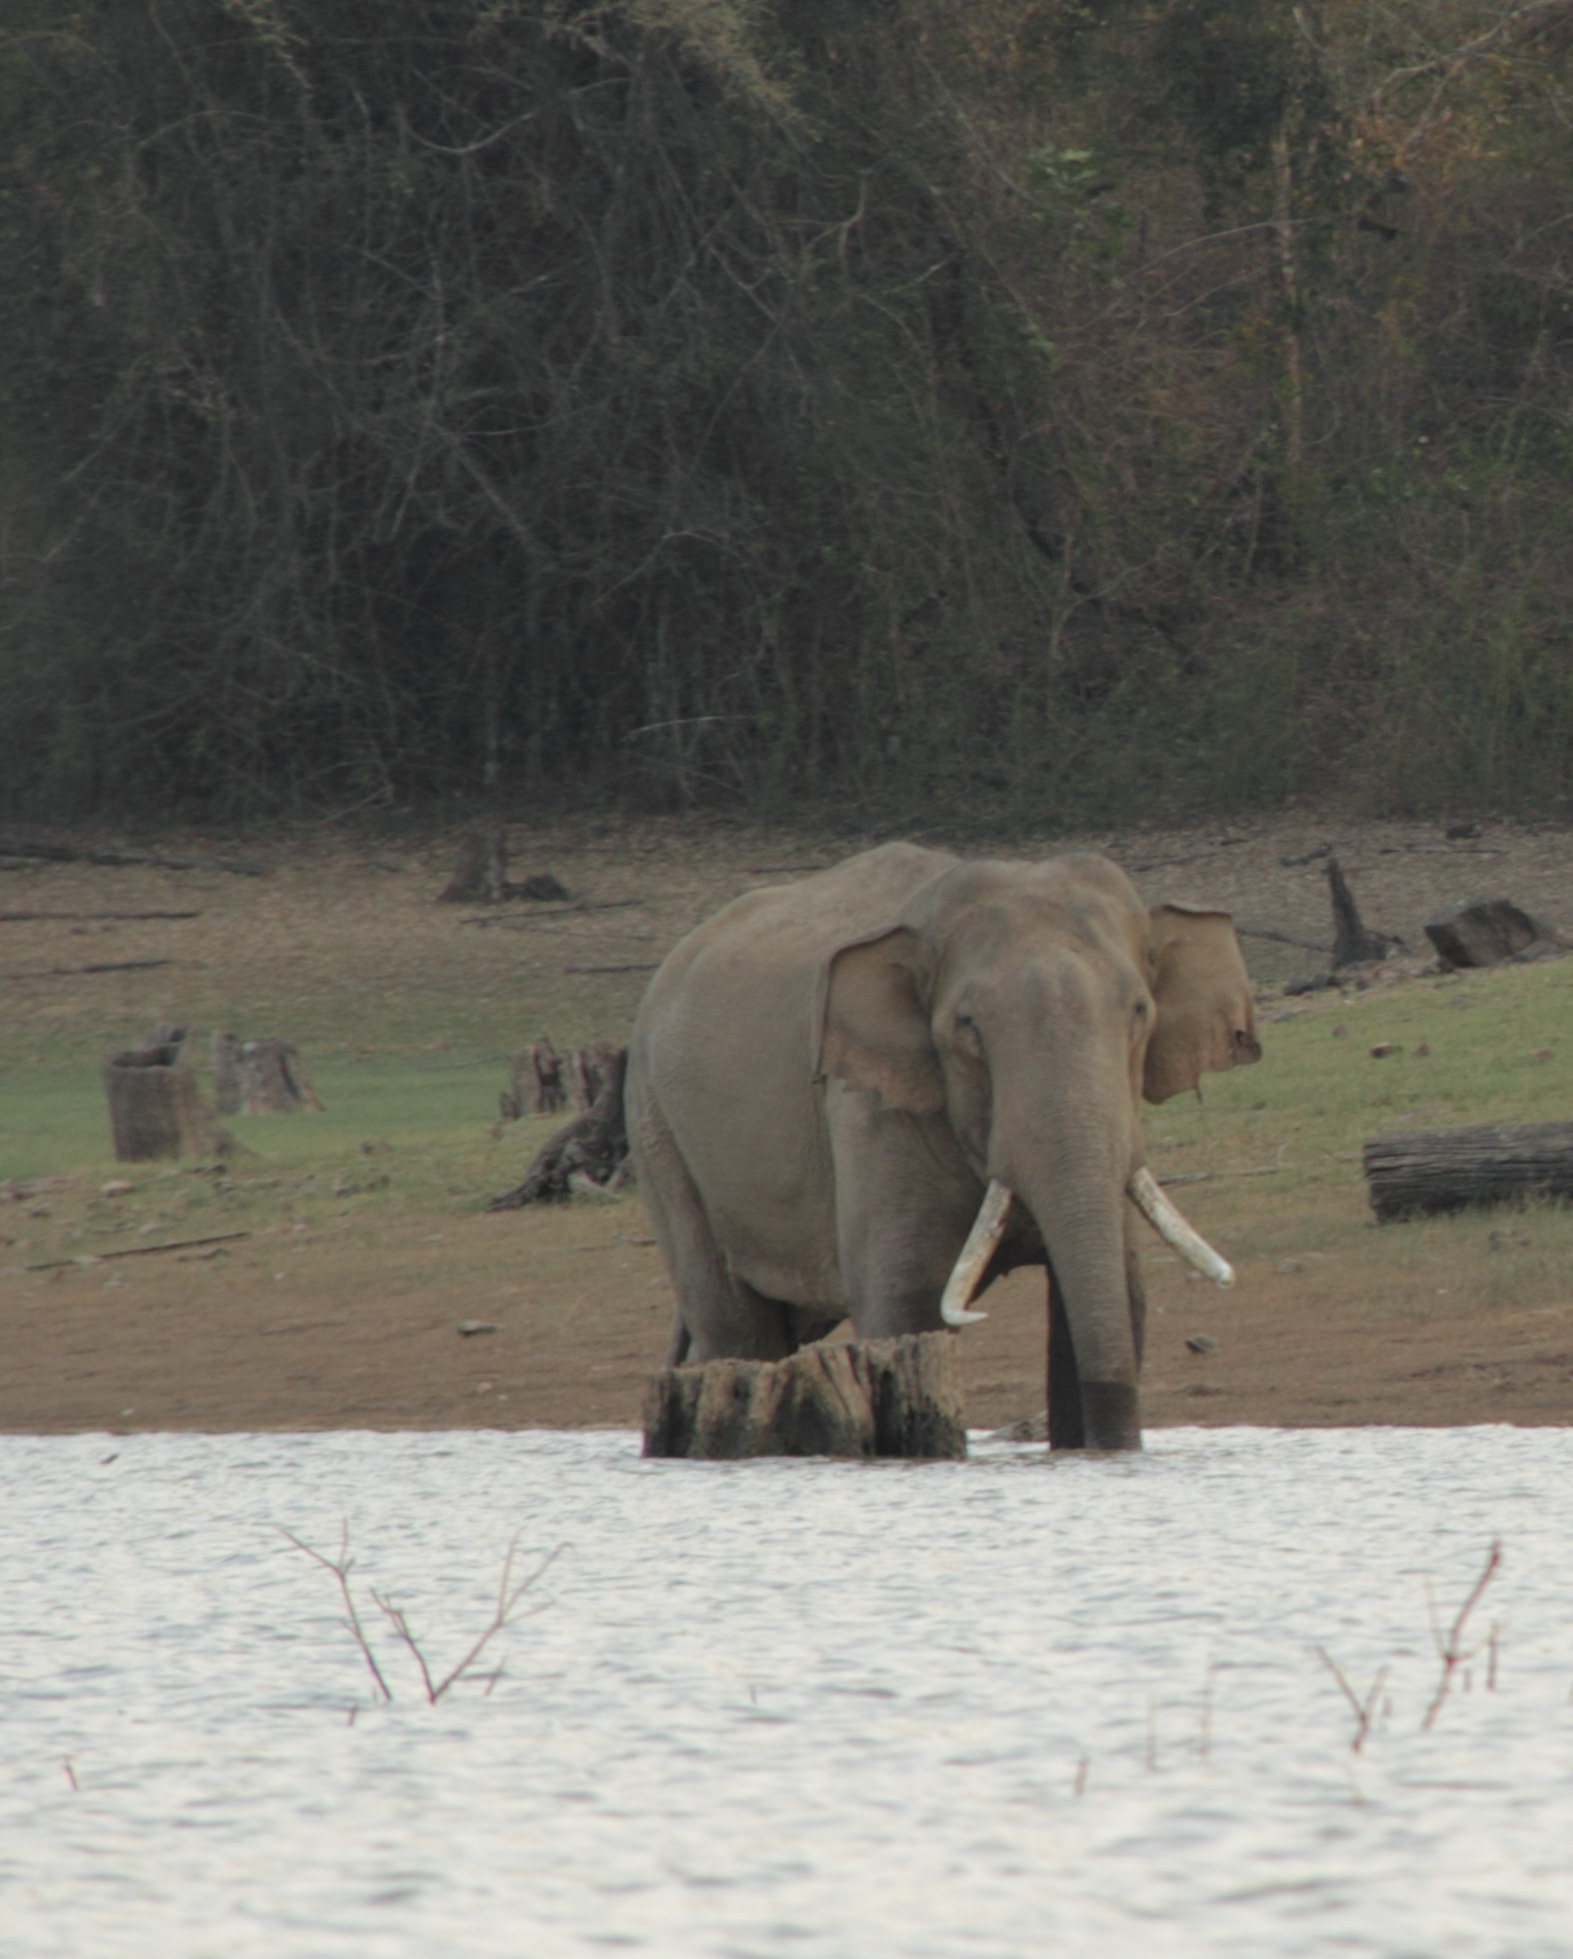 an elephant standing on top of a sandy beach near a lake